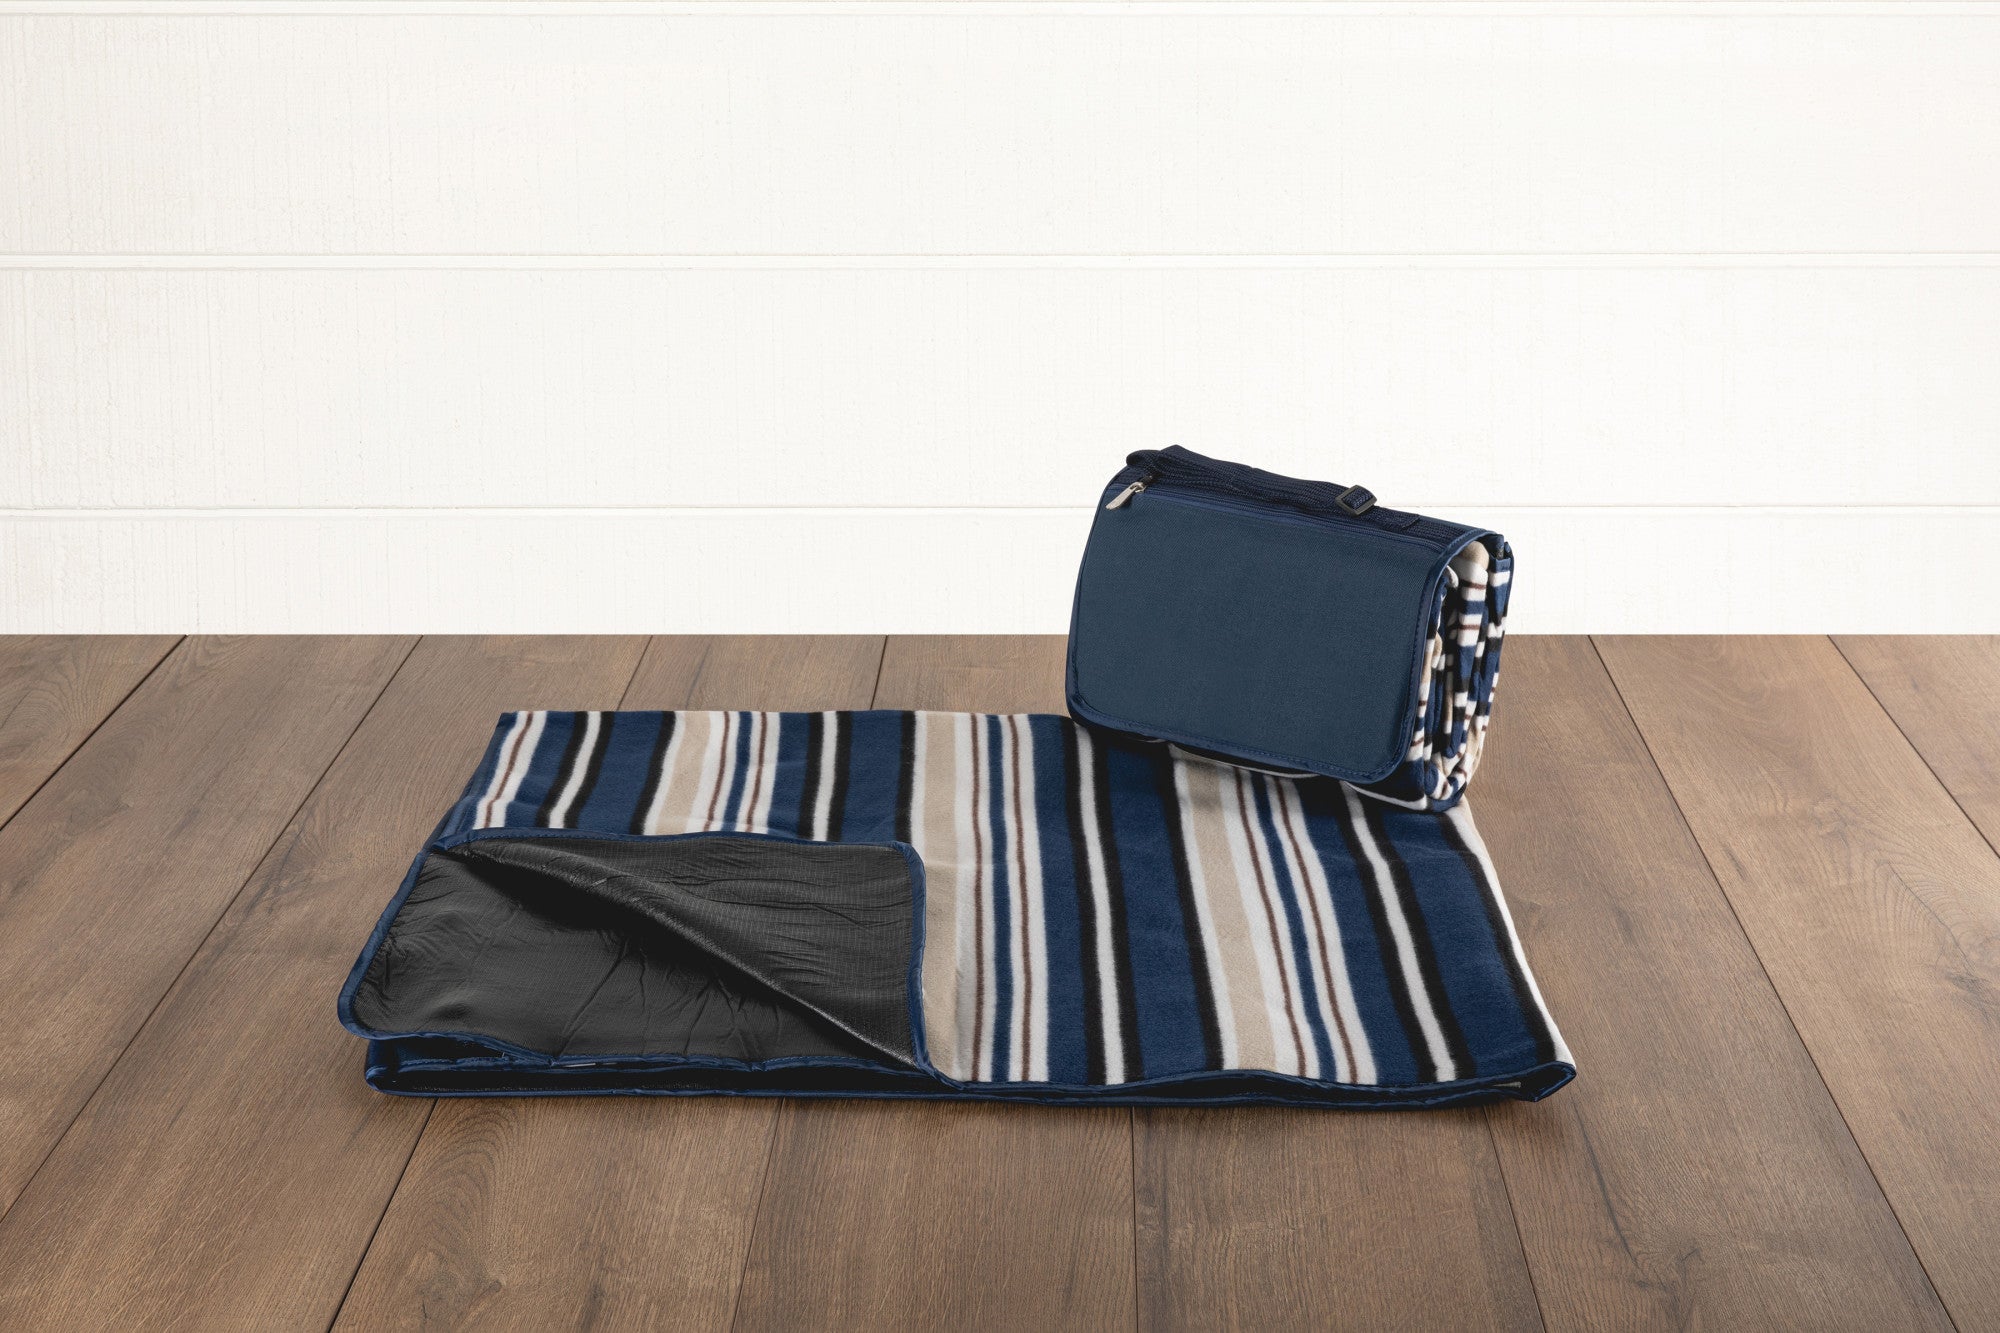 Luca - Blanket Tote Outdoor Picnic Blanket